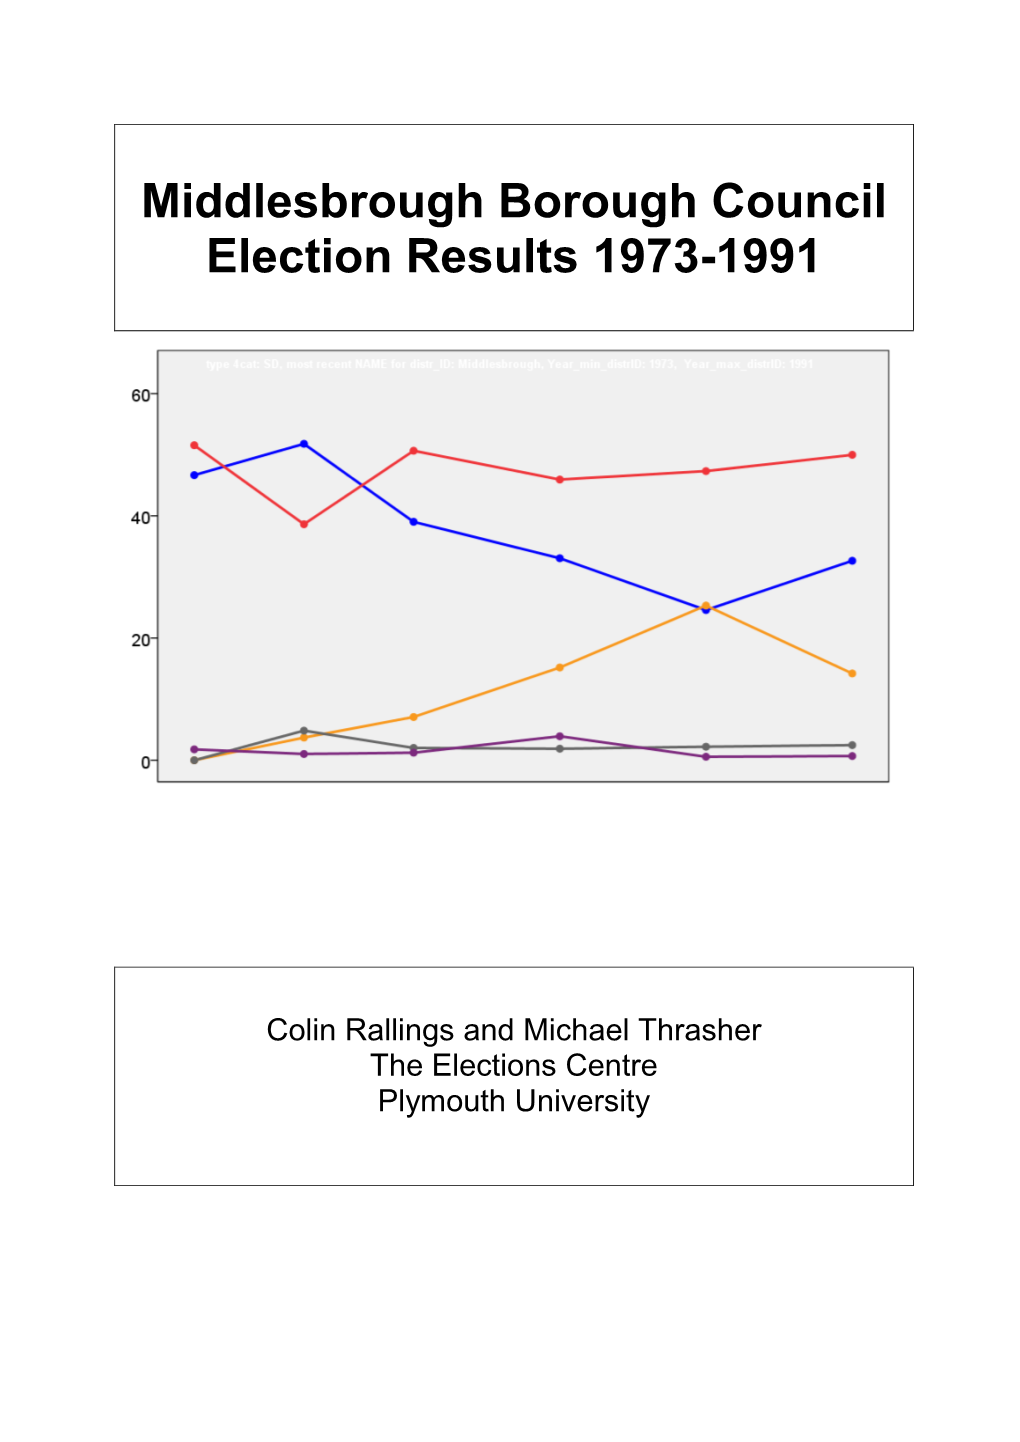 Middlesbrough Borough Council Election Results 1973-1991